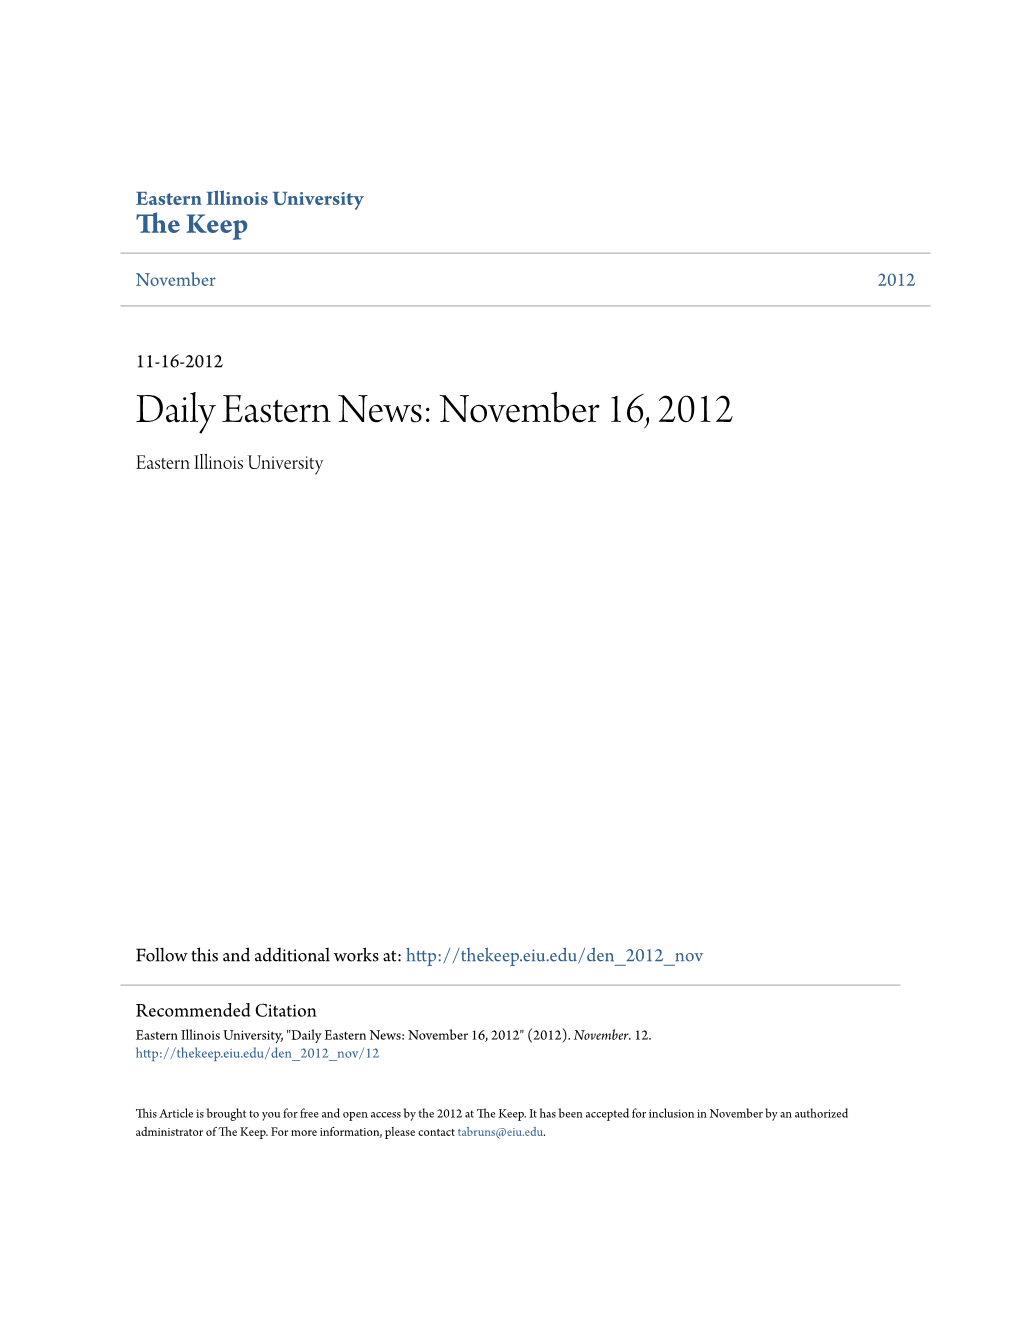 Eastern News: November 16, 2012 Eastern Illinois University